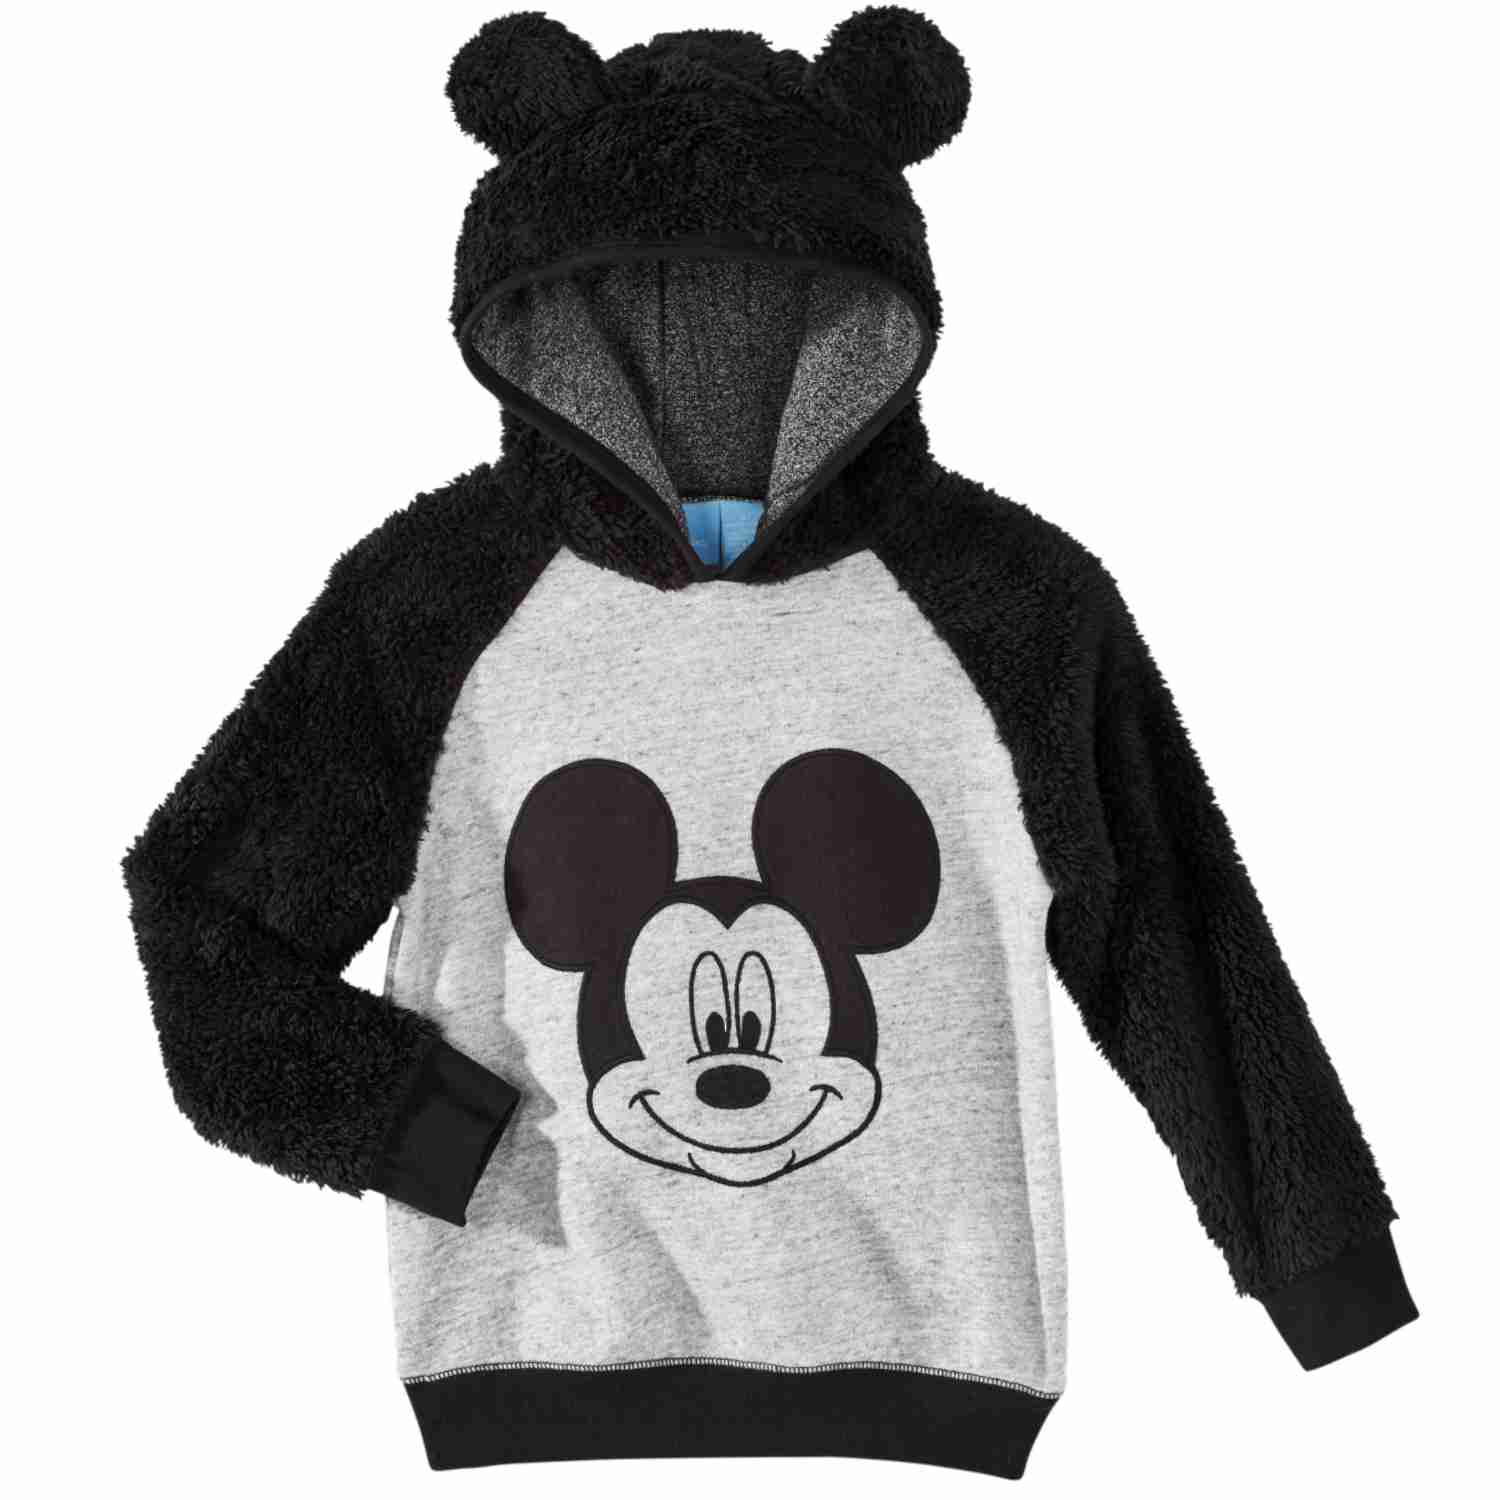 Disney Infant Boys Plush Black & Gray Mickey Mouse Hoodie Sweatshirt